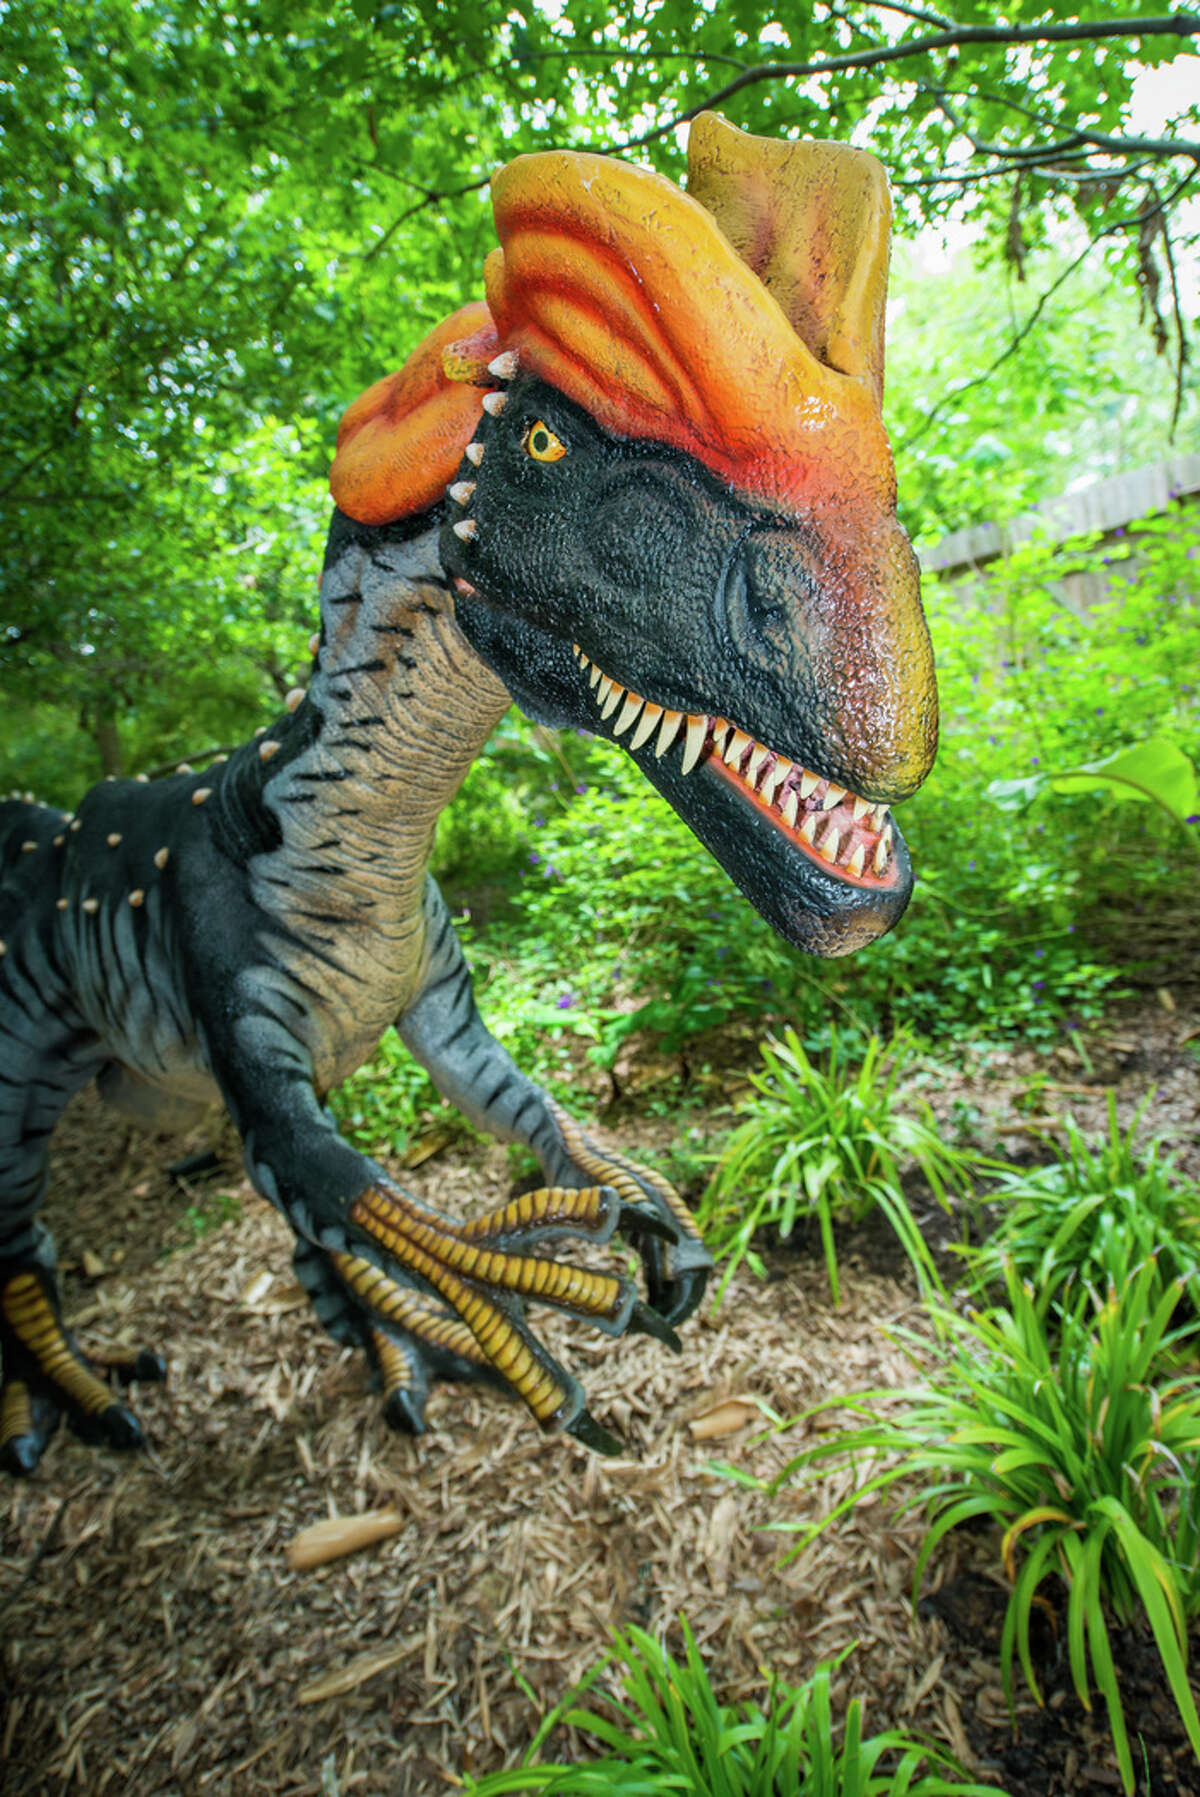 Life-size animatronic Dinosaur roar at the Houston Zoo.